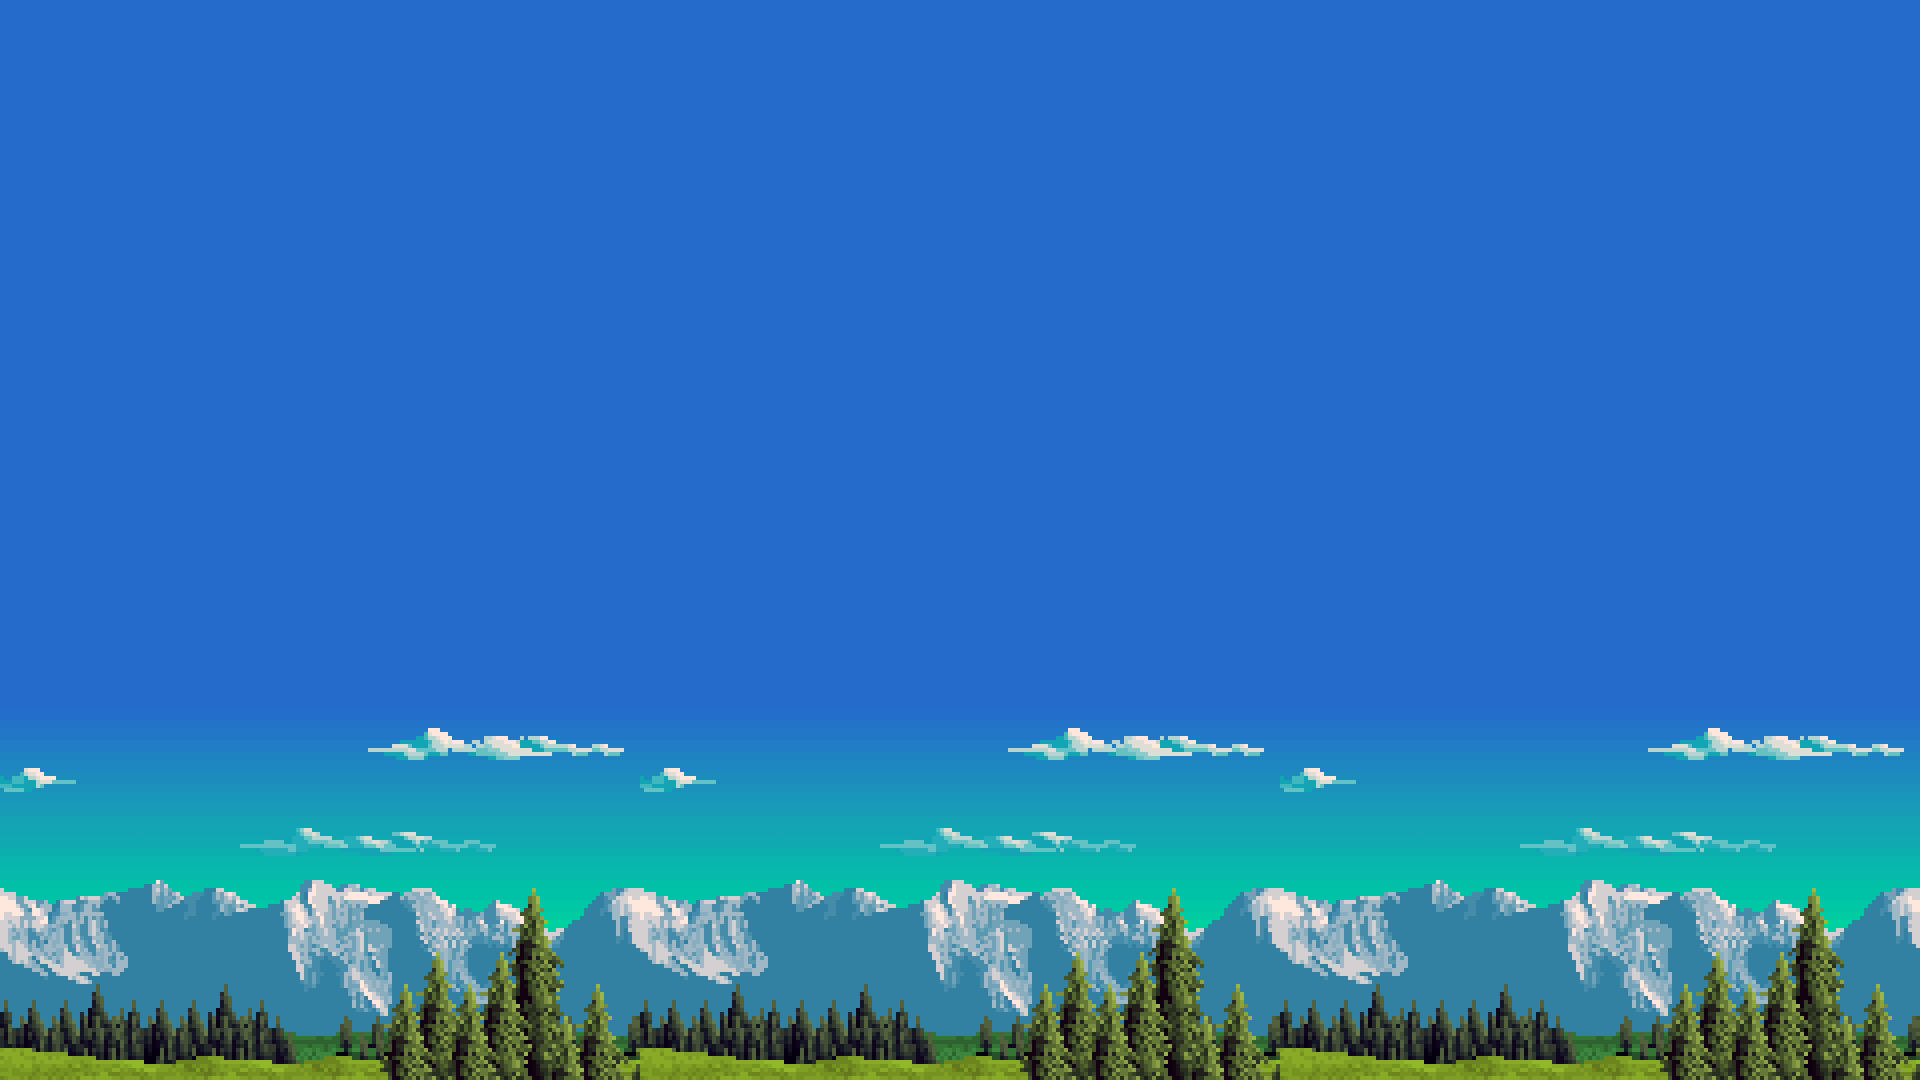 Pixel Art Landscapes. Pixel art landscape, Pixel art, Water illustration